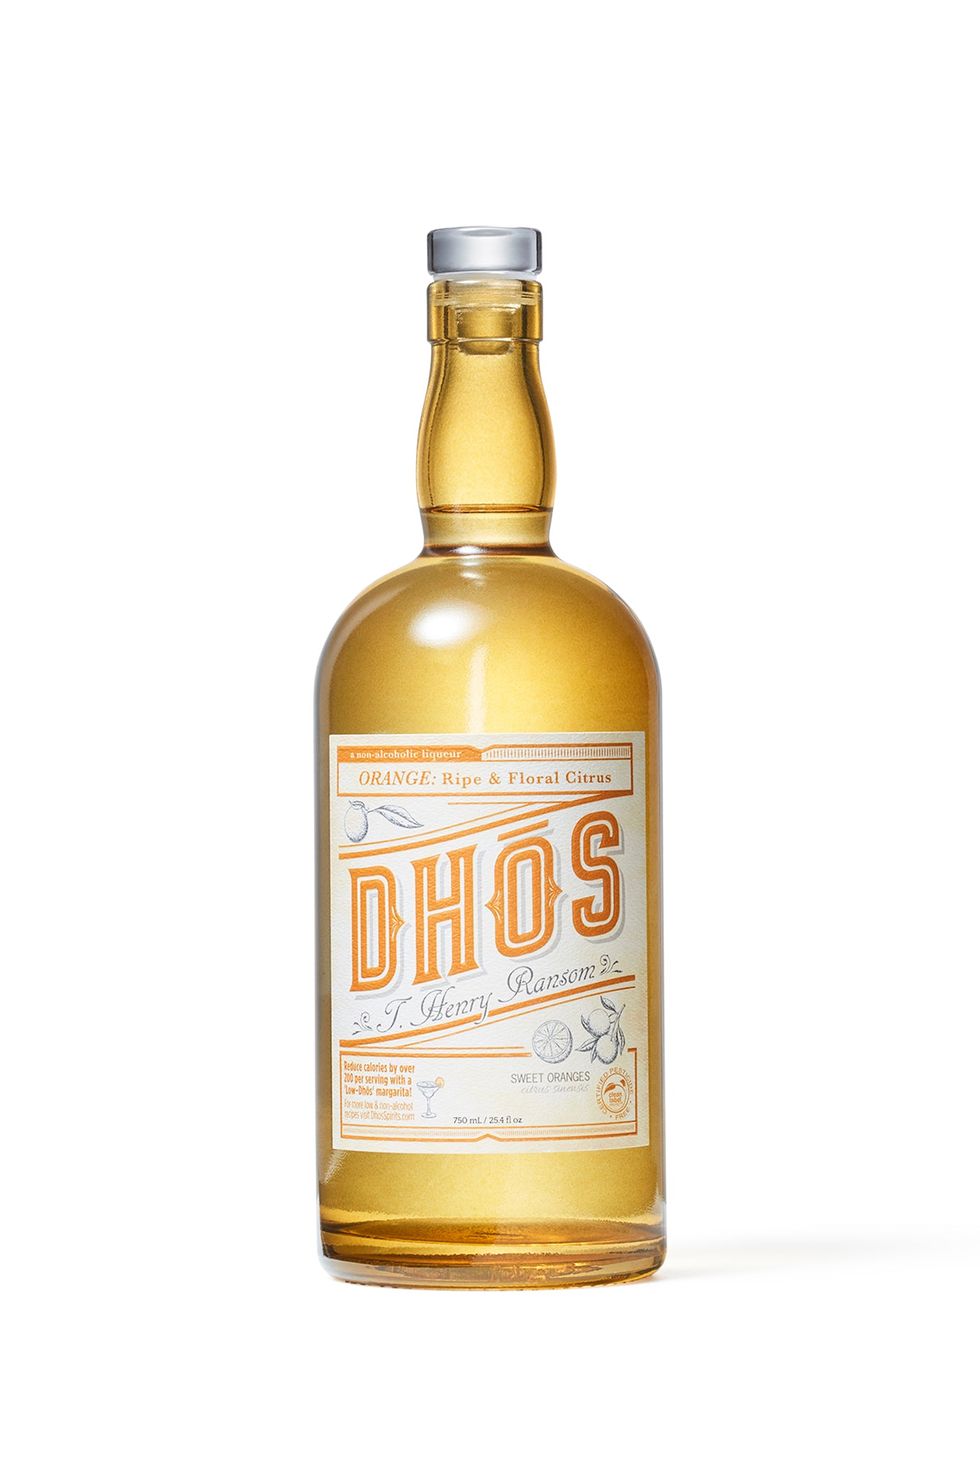 DHOS Orange Non-Alcoholic Spirit